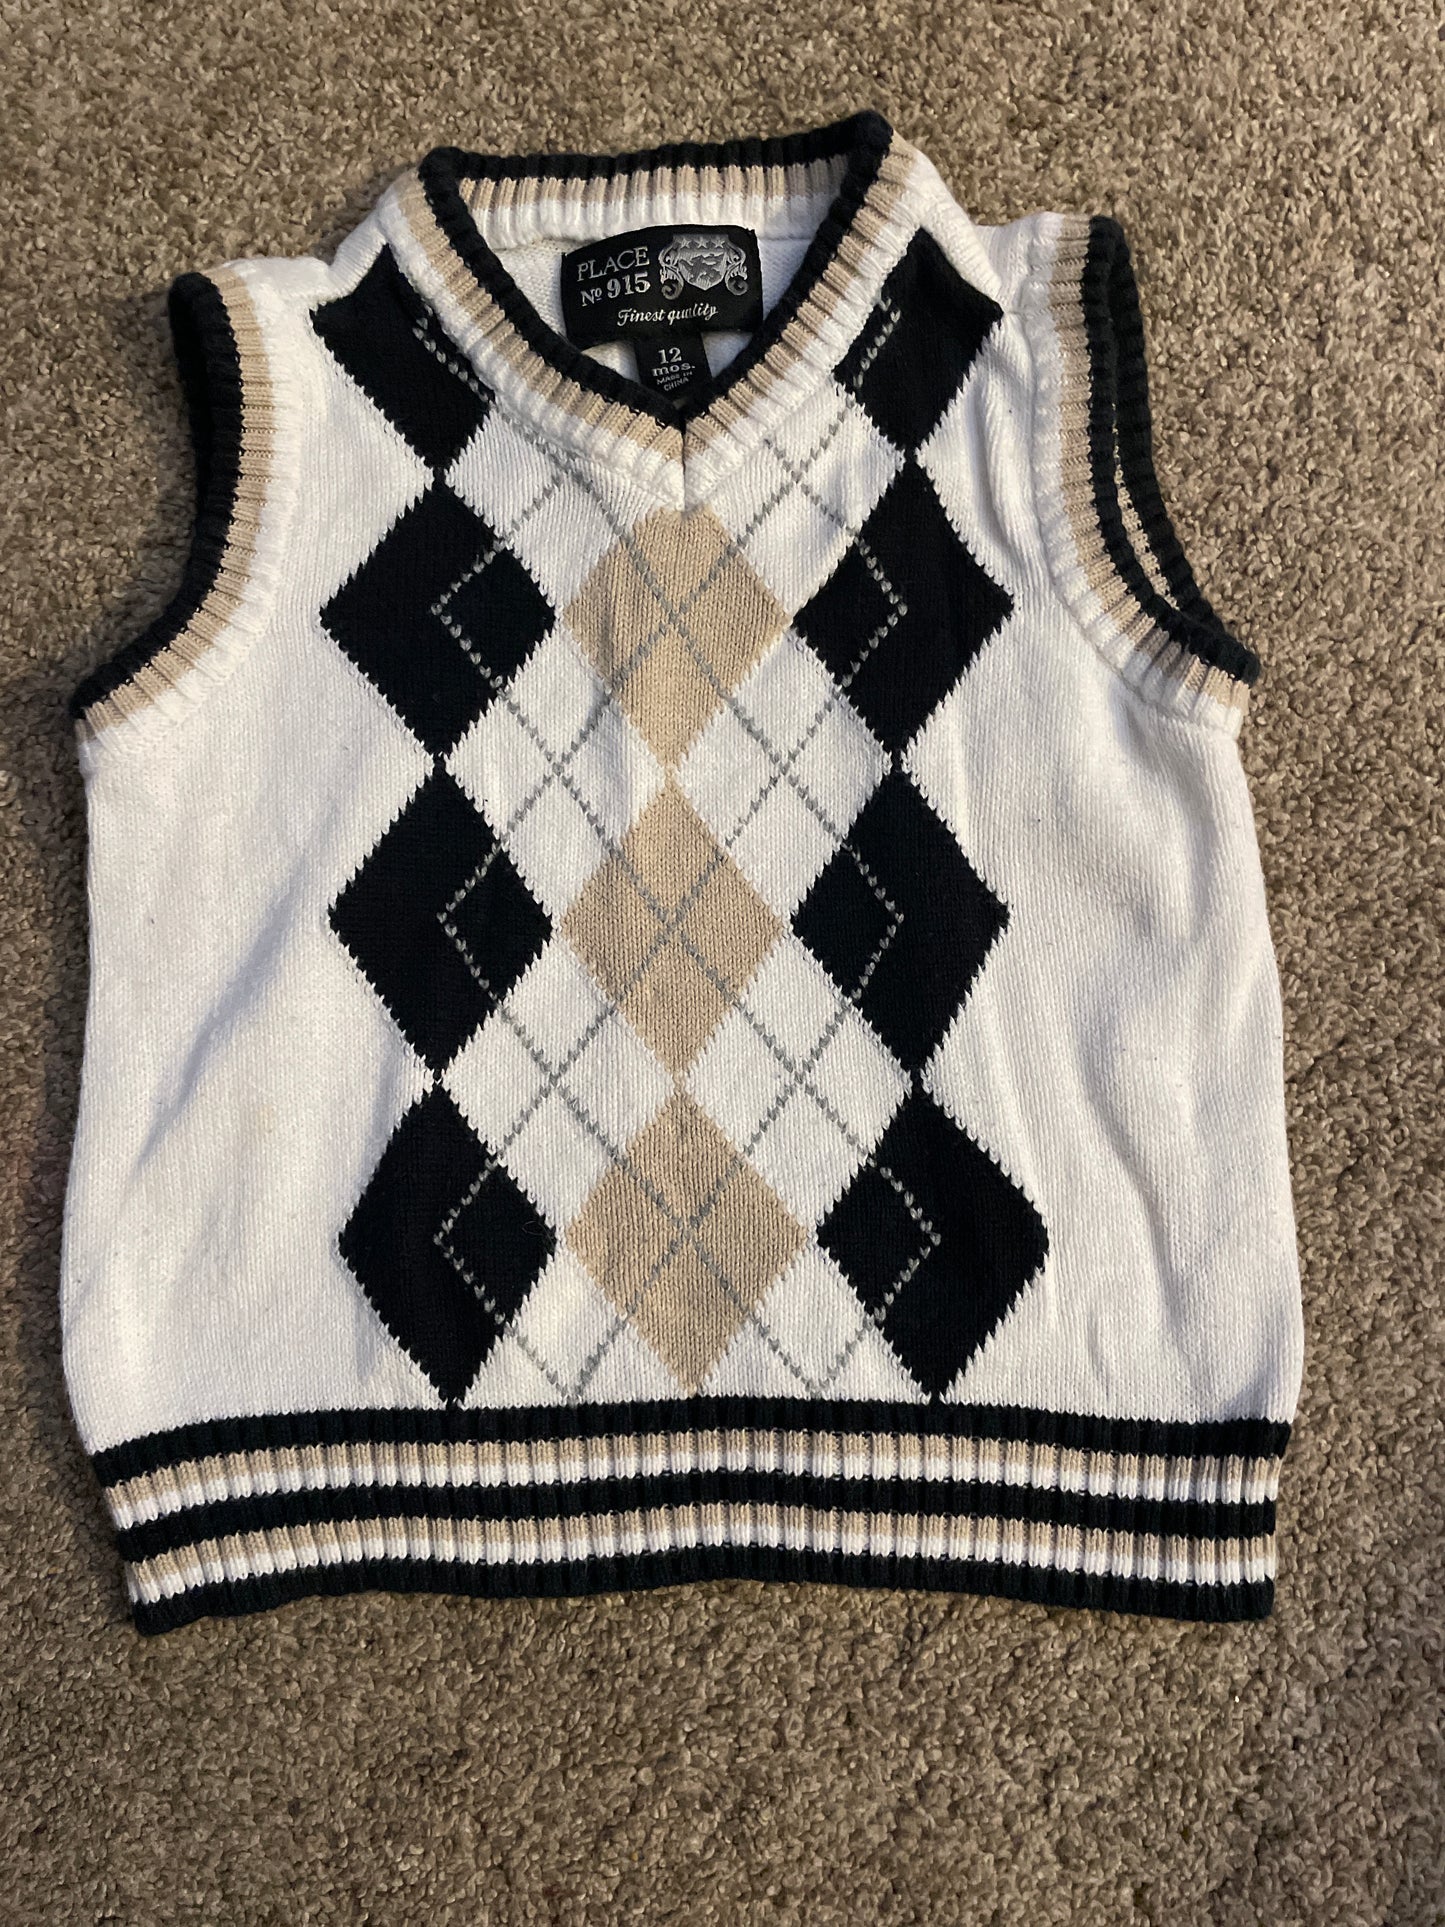 12 month sweater vest